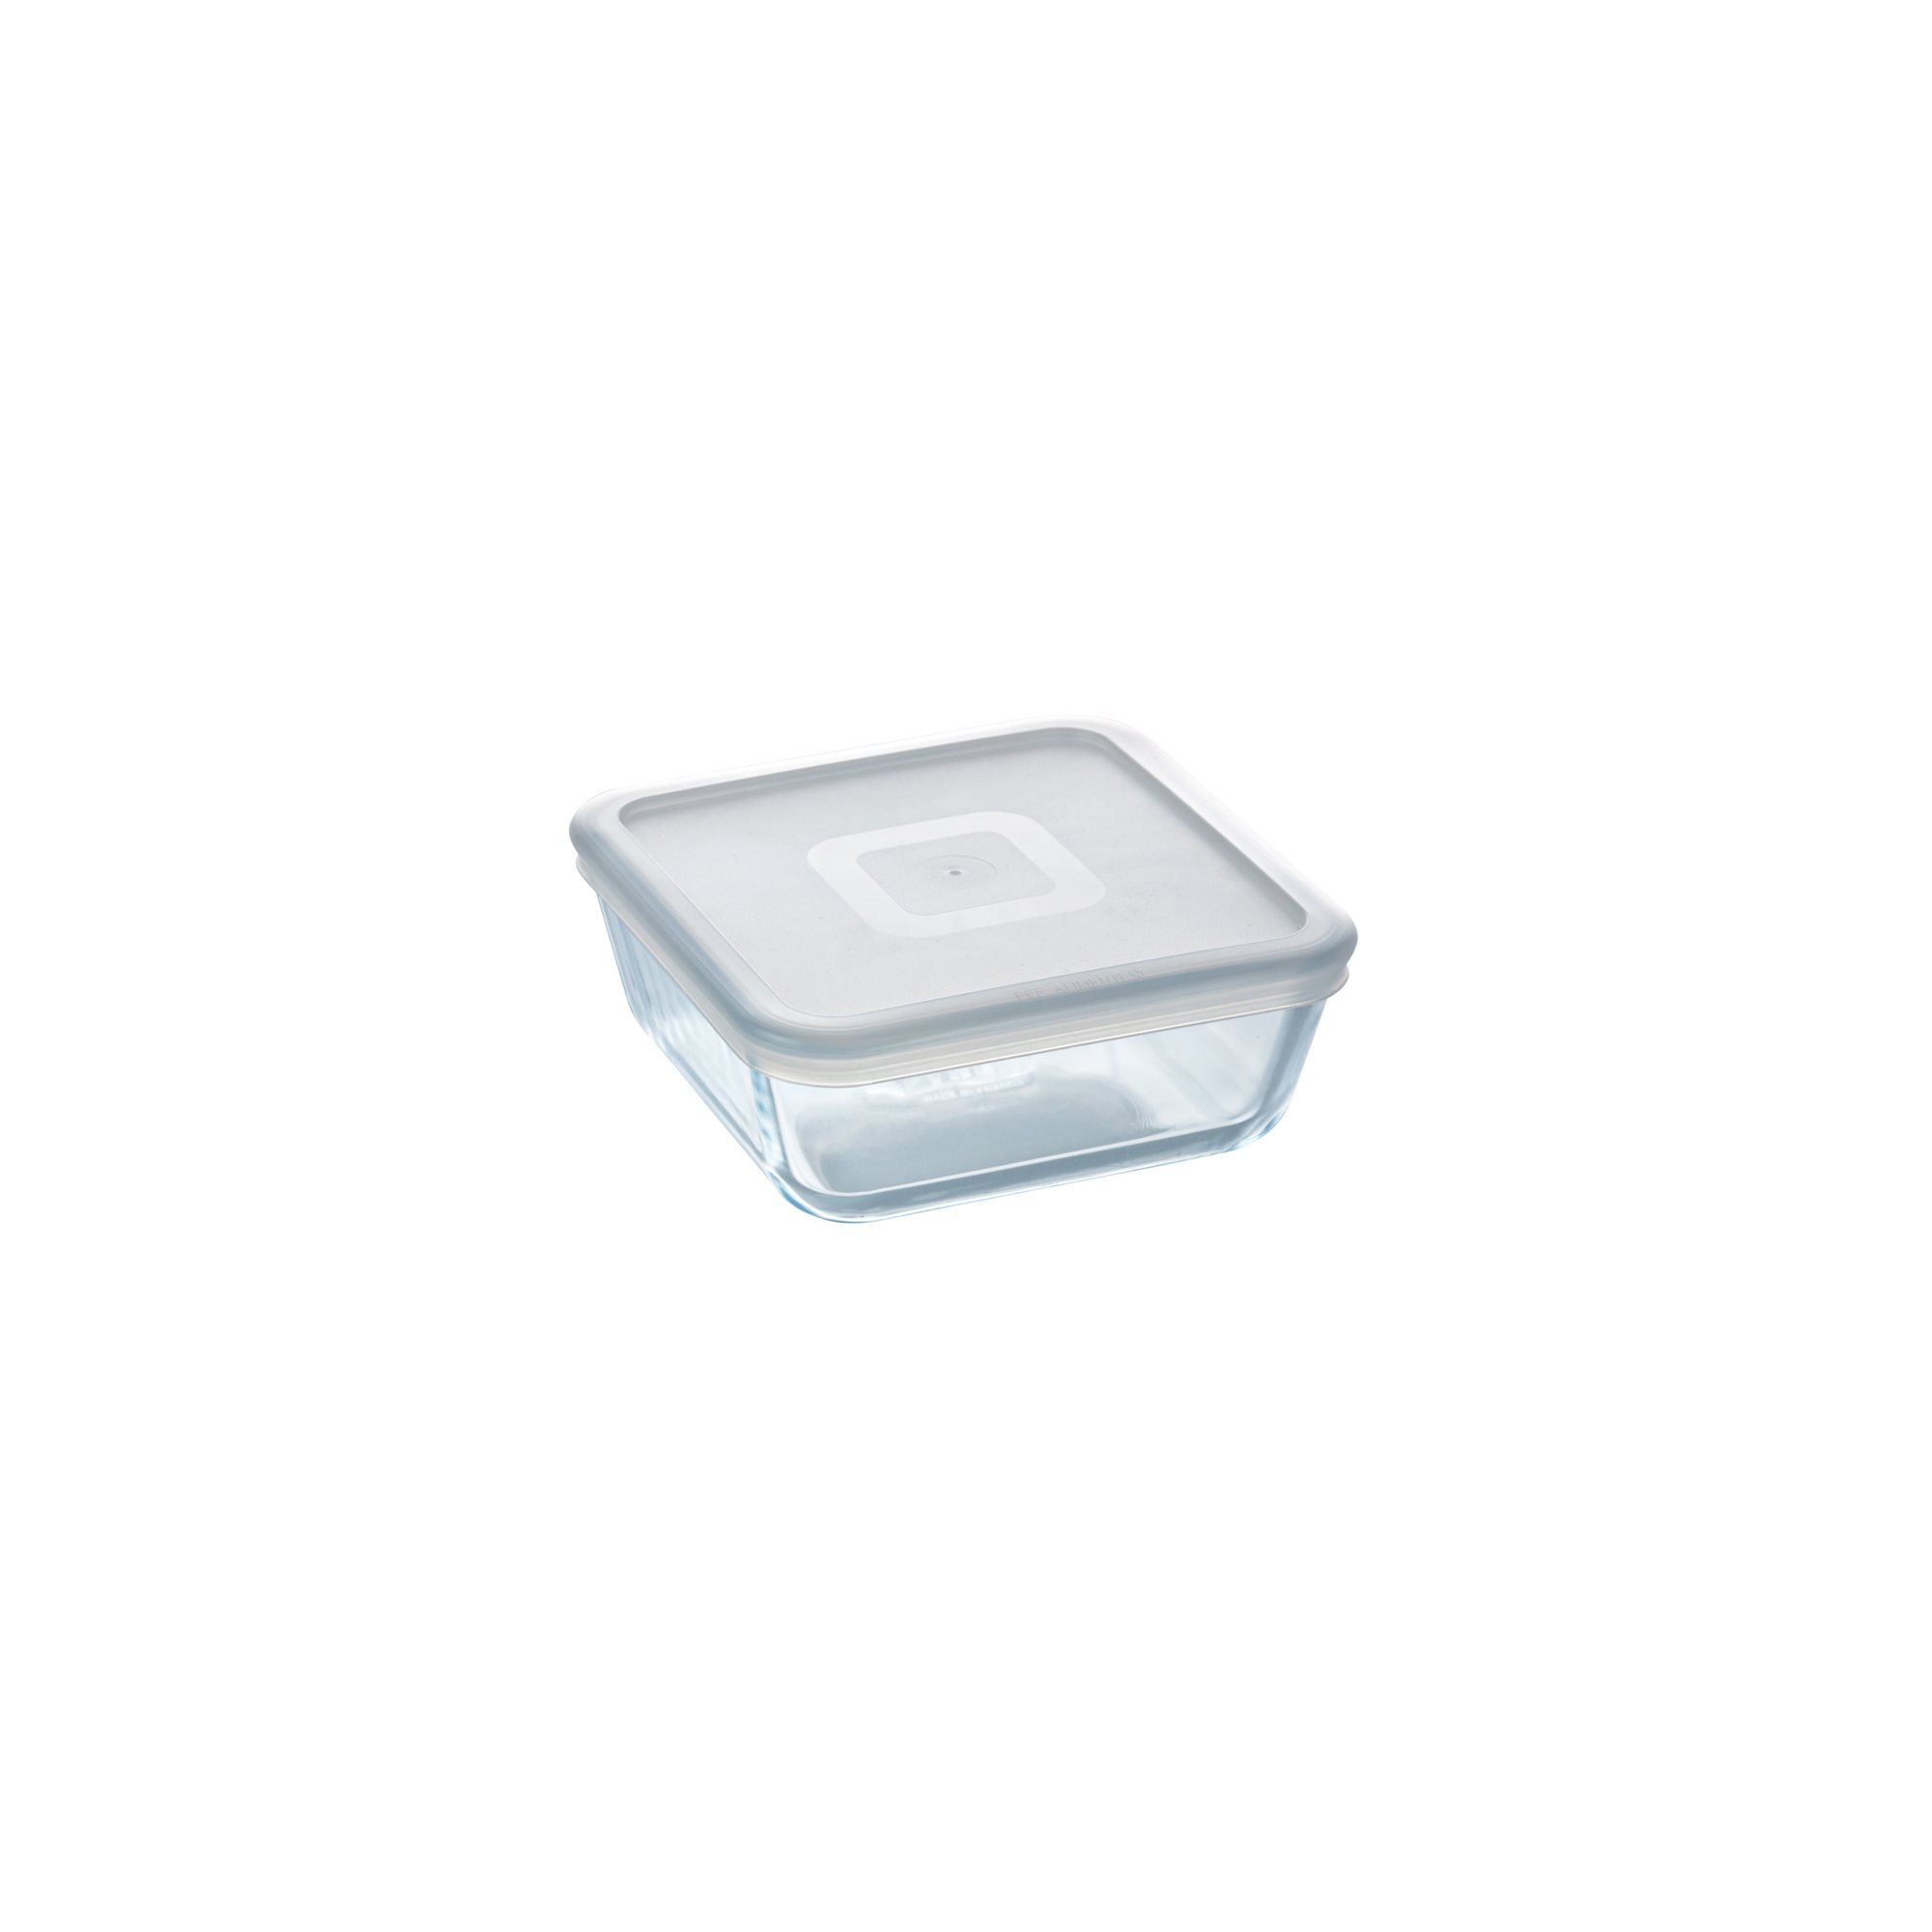 Boek stap in etiket Cook & Freeze" vierkante voedselcontainer, gemaakt van hittebestendig glas,  850 ml, met kunststof deksel - Pyrex | KitchenShop